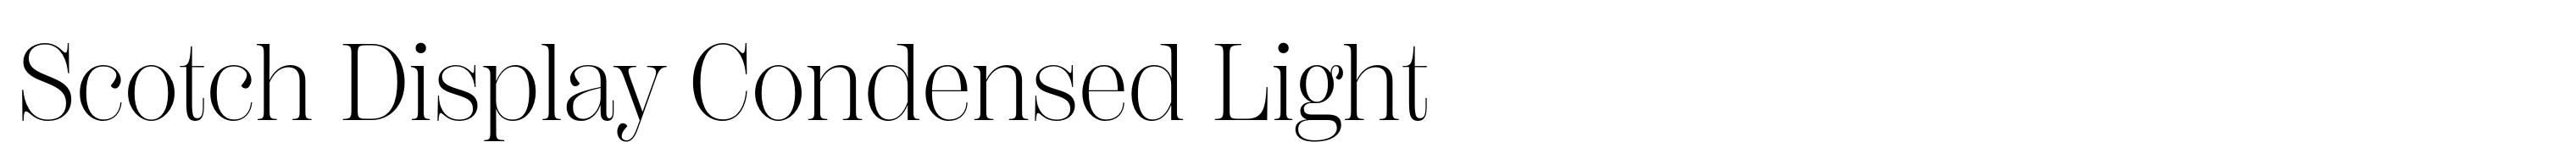 Scotch Display Condensed Light